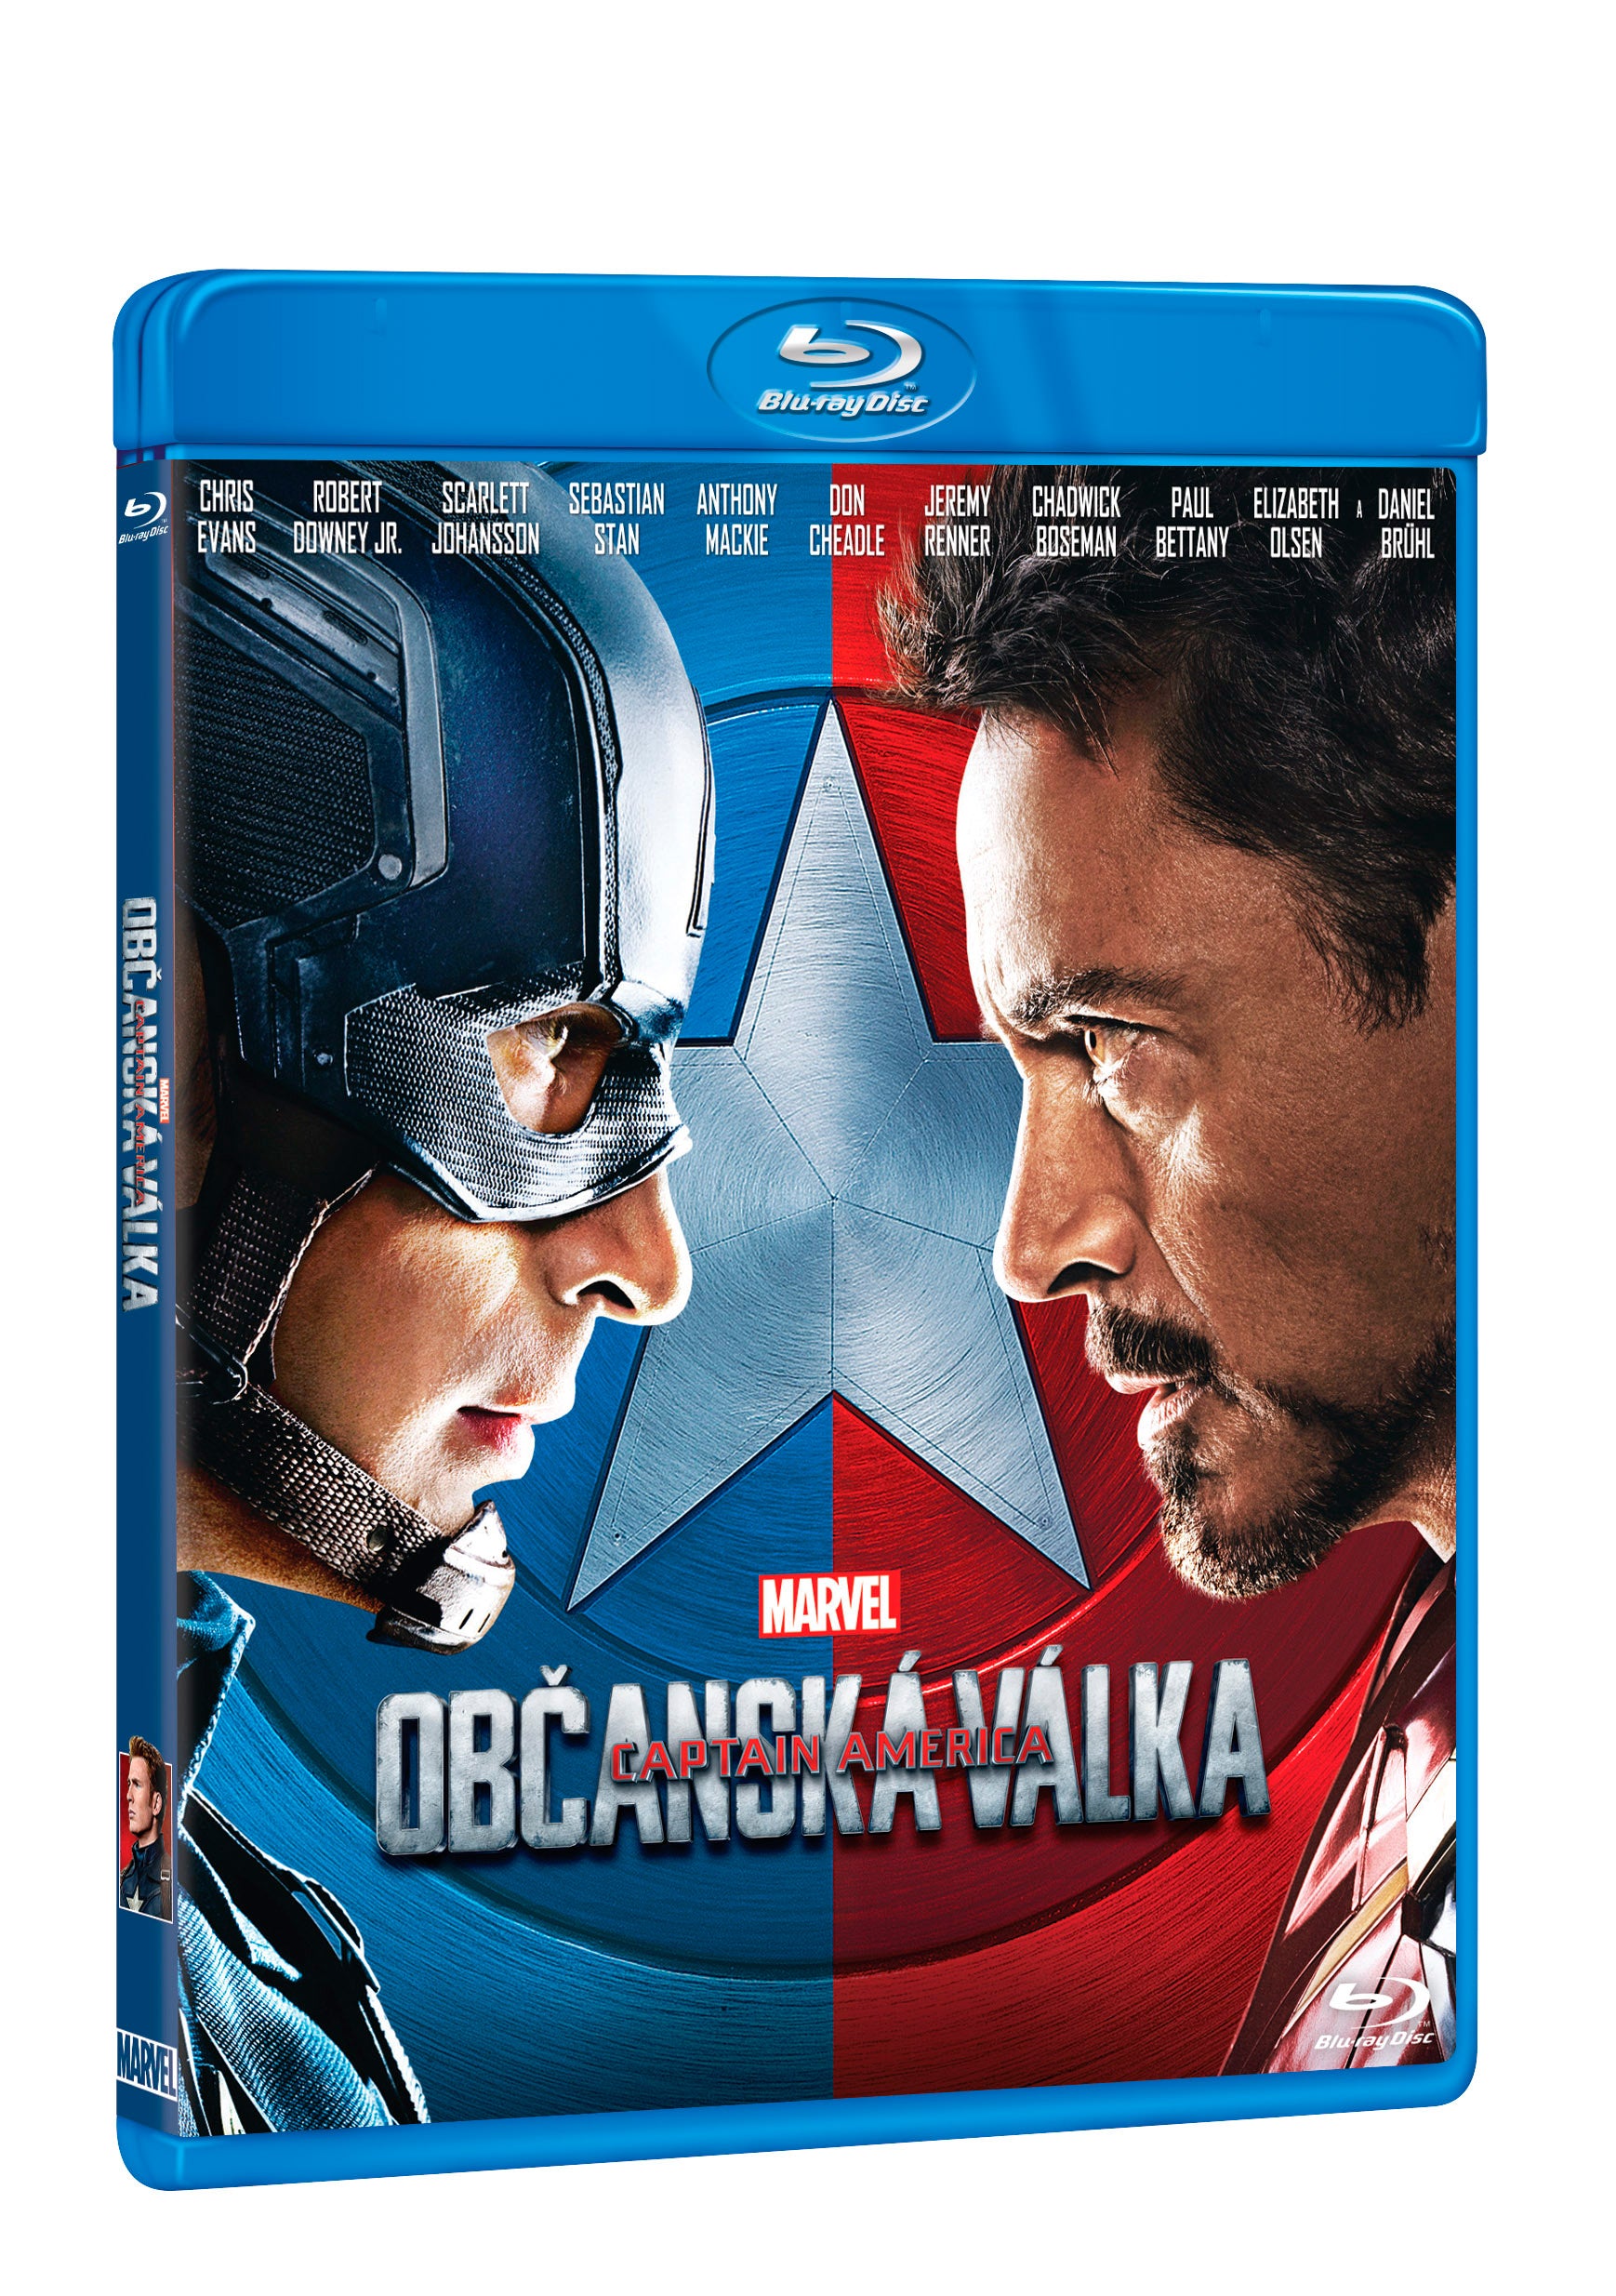 Captain America: Obcanska valka BD / Captain America: Civil War - Czech version